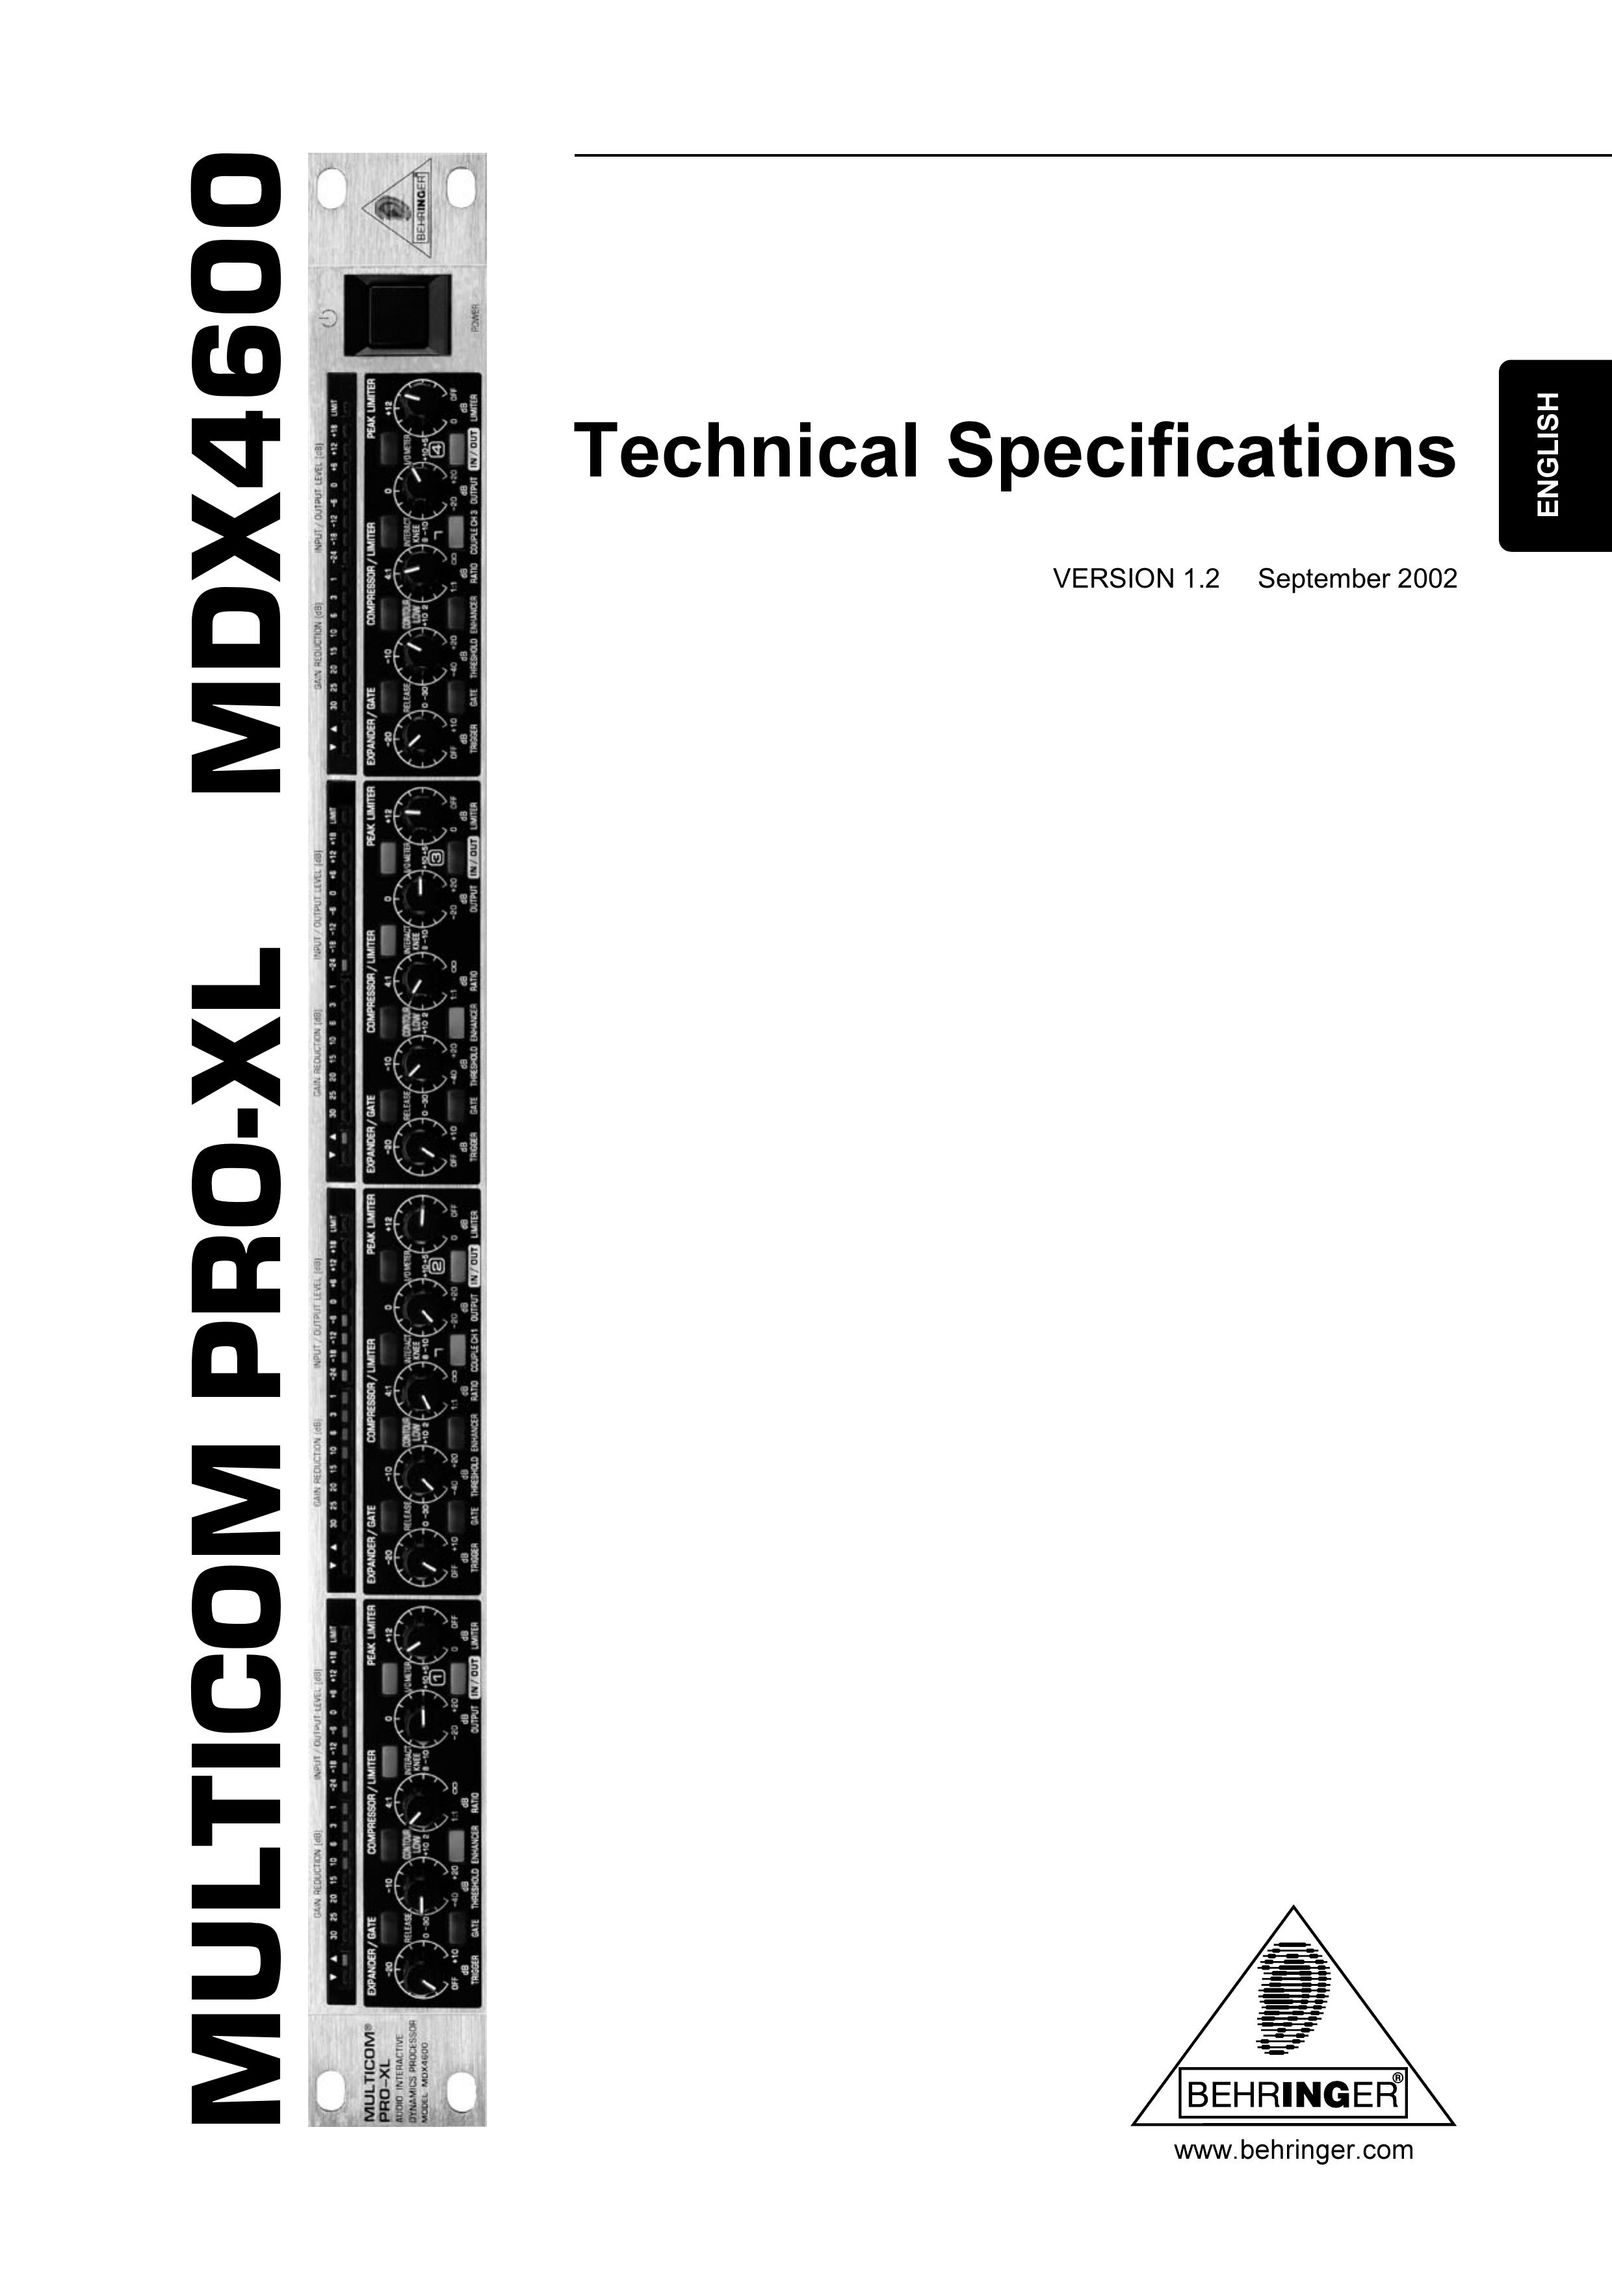 Berning MDX4600 Car Amplifier User Manual